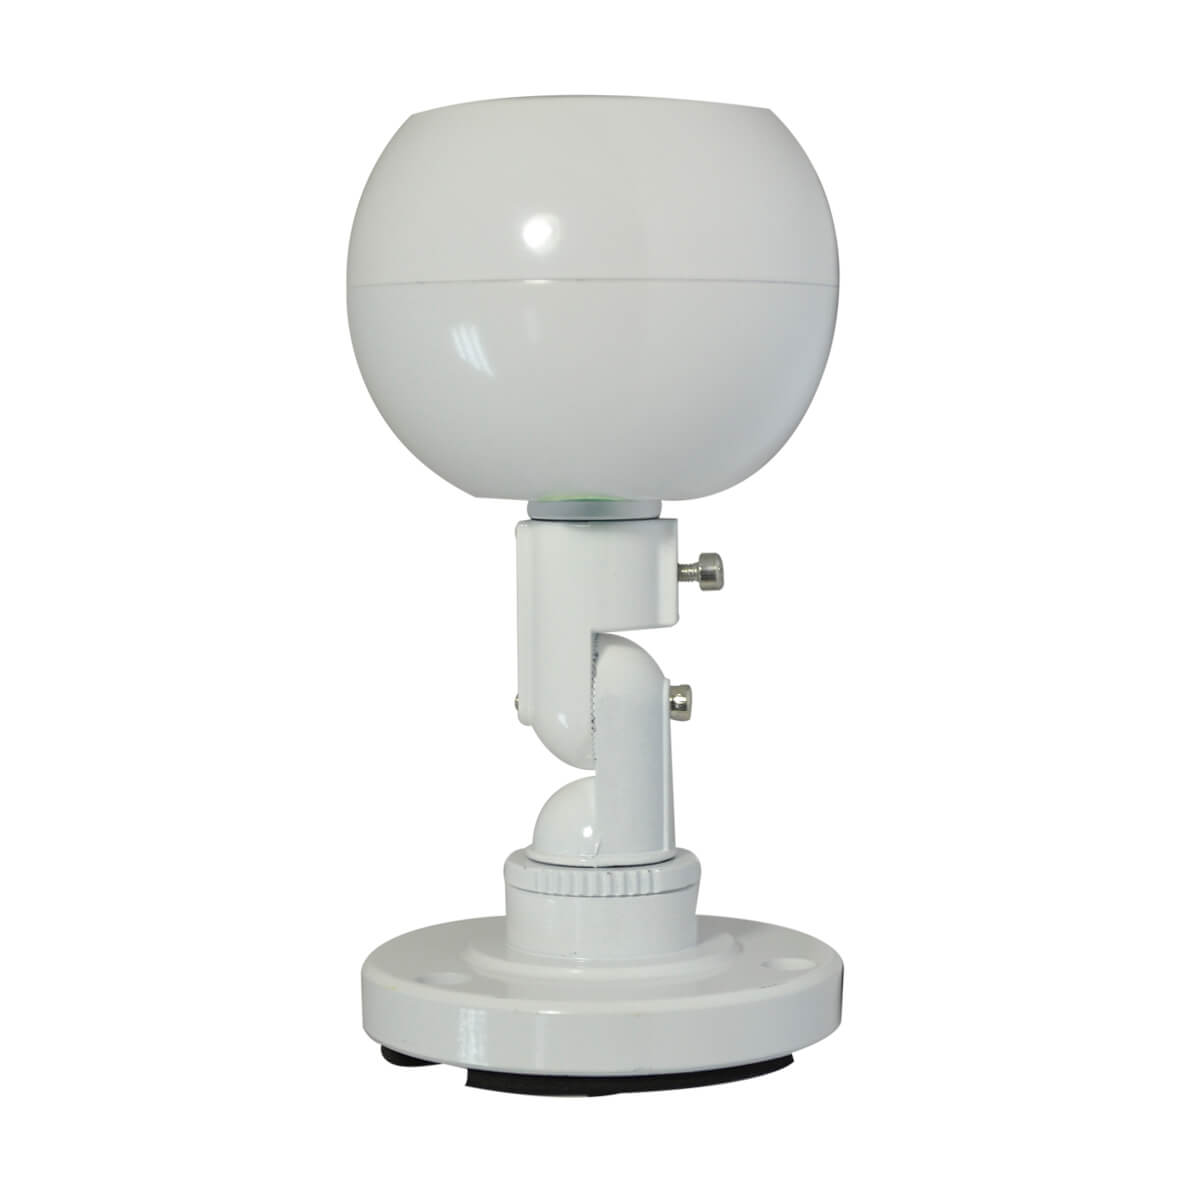 Camara tipo domo, Sensor HD CCD 1/4, resolucion 700TVL, 24 LED, 20m IR